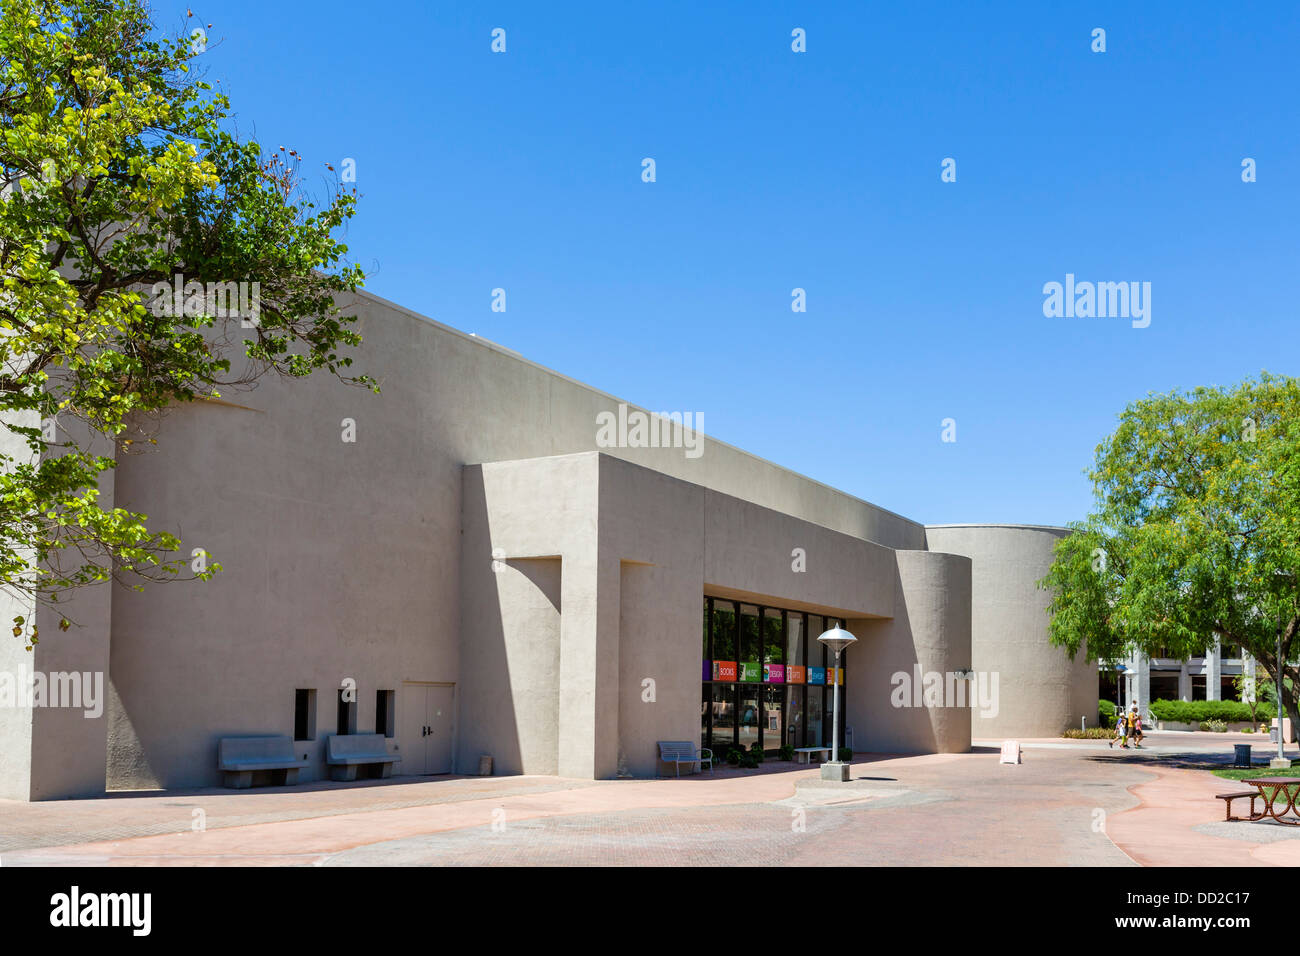 Scottsdale Center for the Performing Arts, Civic Center Mall, de Scottsdale, Arizona, EE.UU. Foto de stock